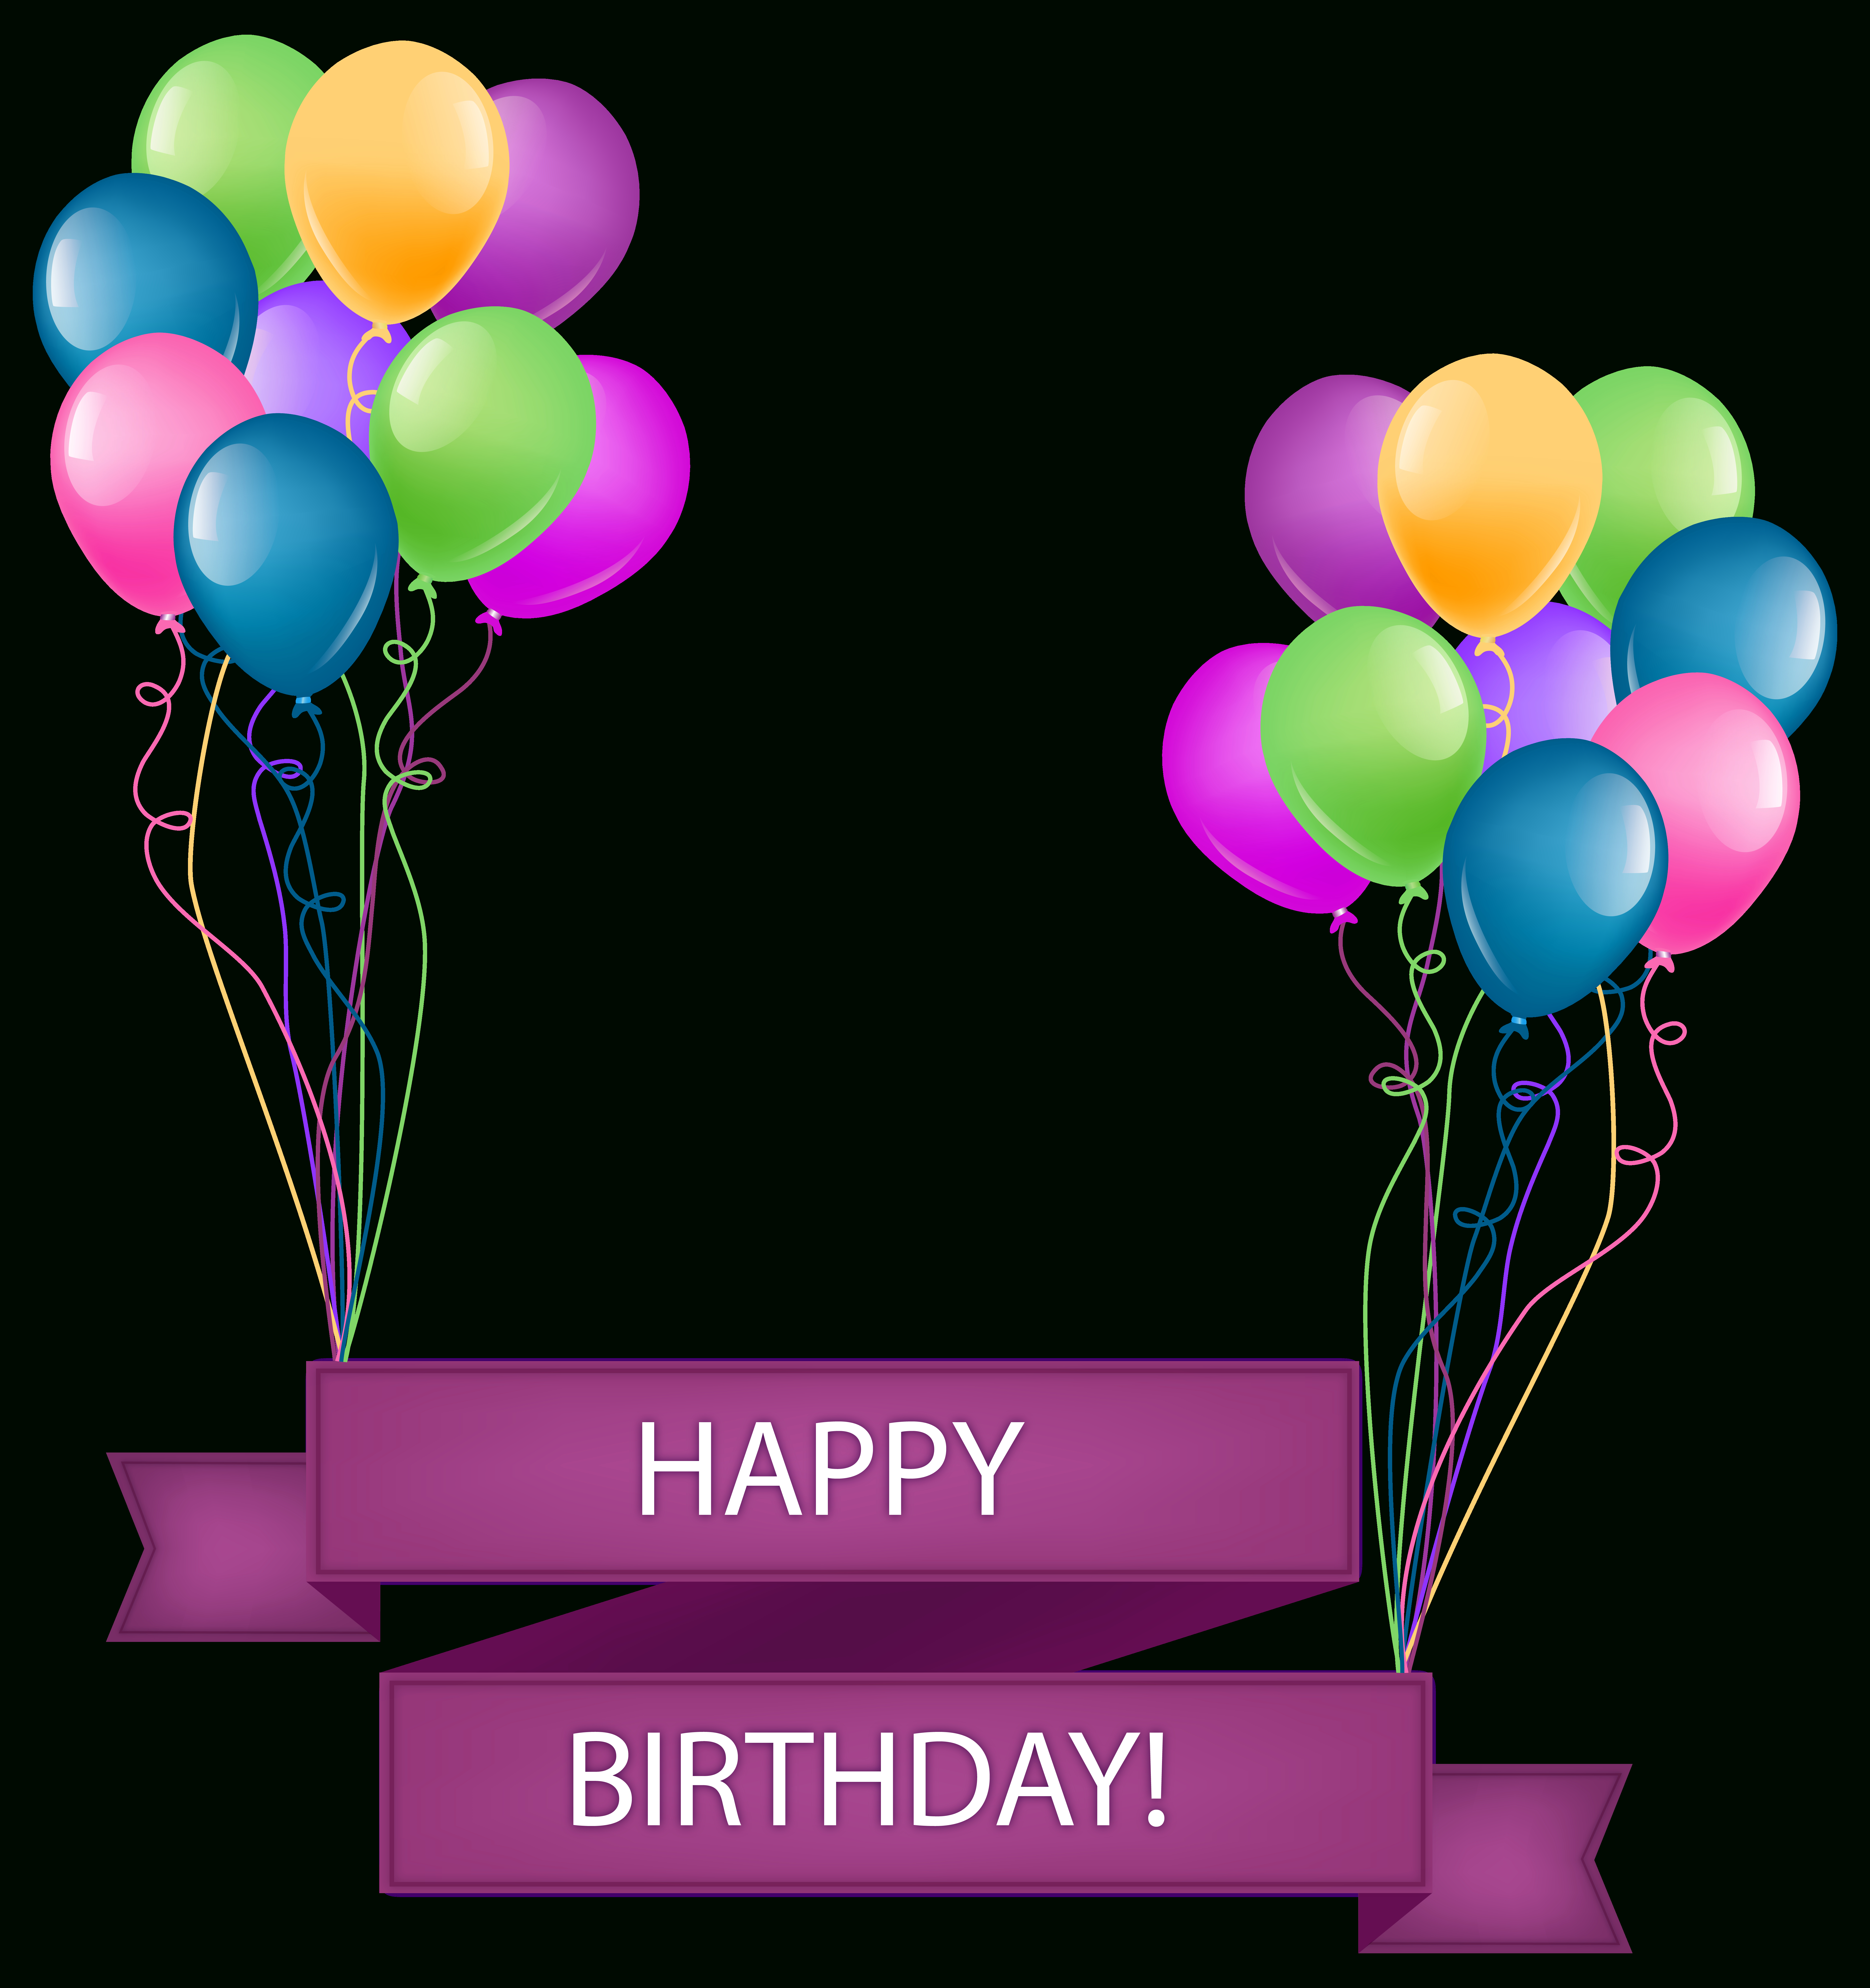 Happy Birthday Banner Designs Free Download – Yeppe Throughout Free Happy Birthday Banner Templates Download